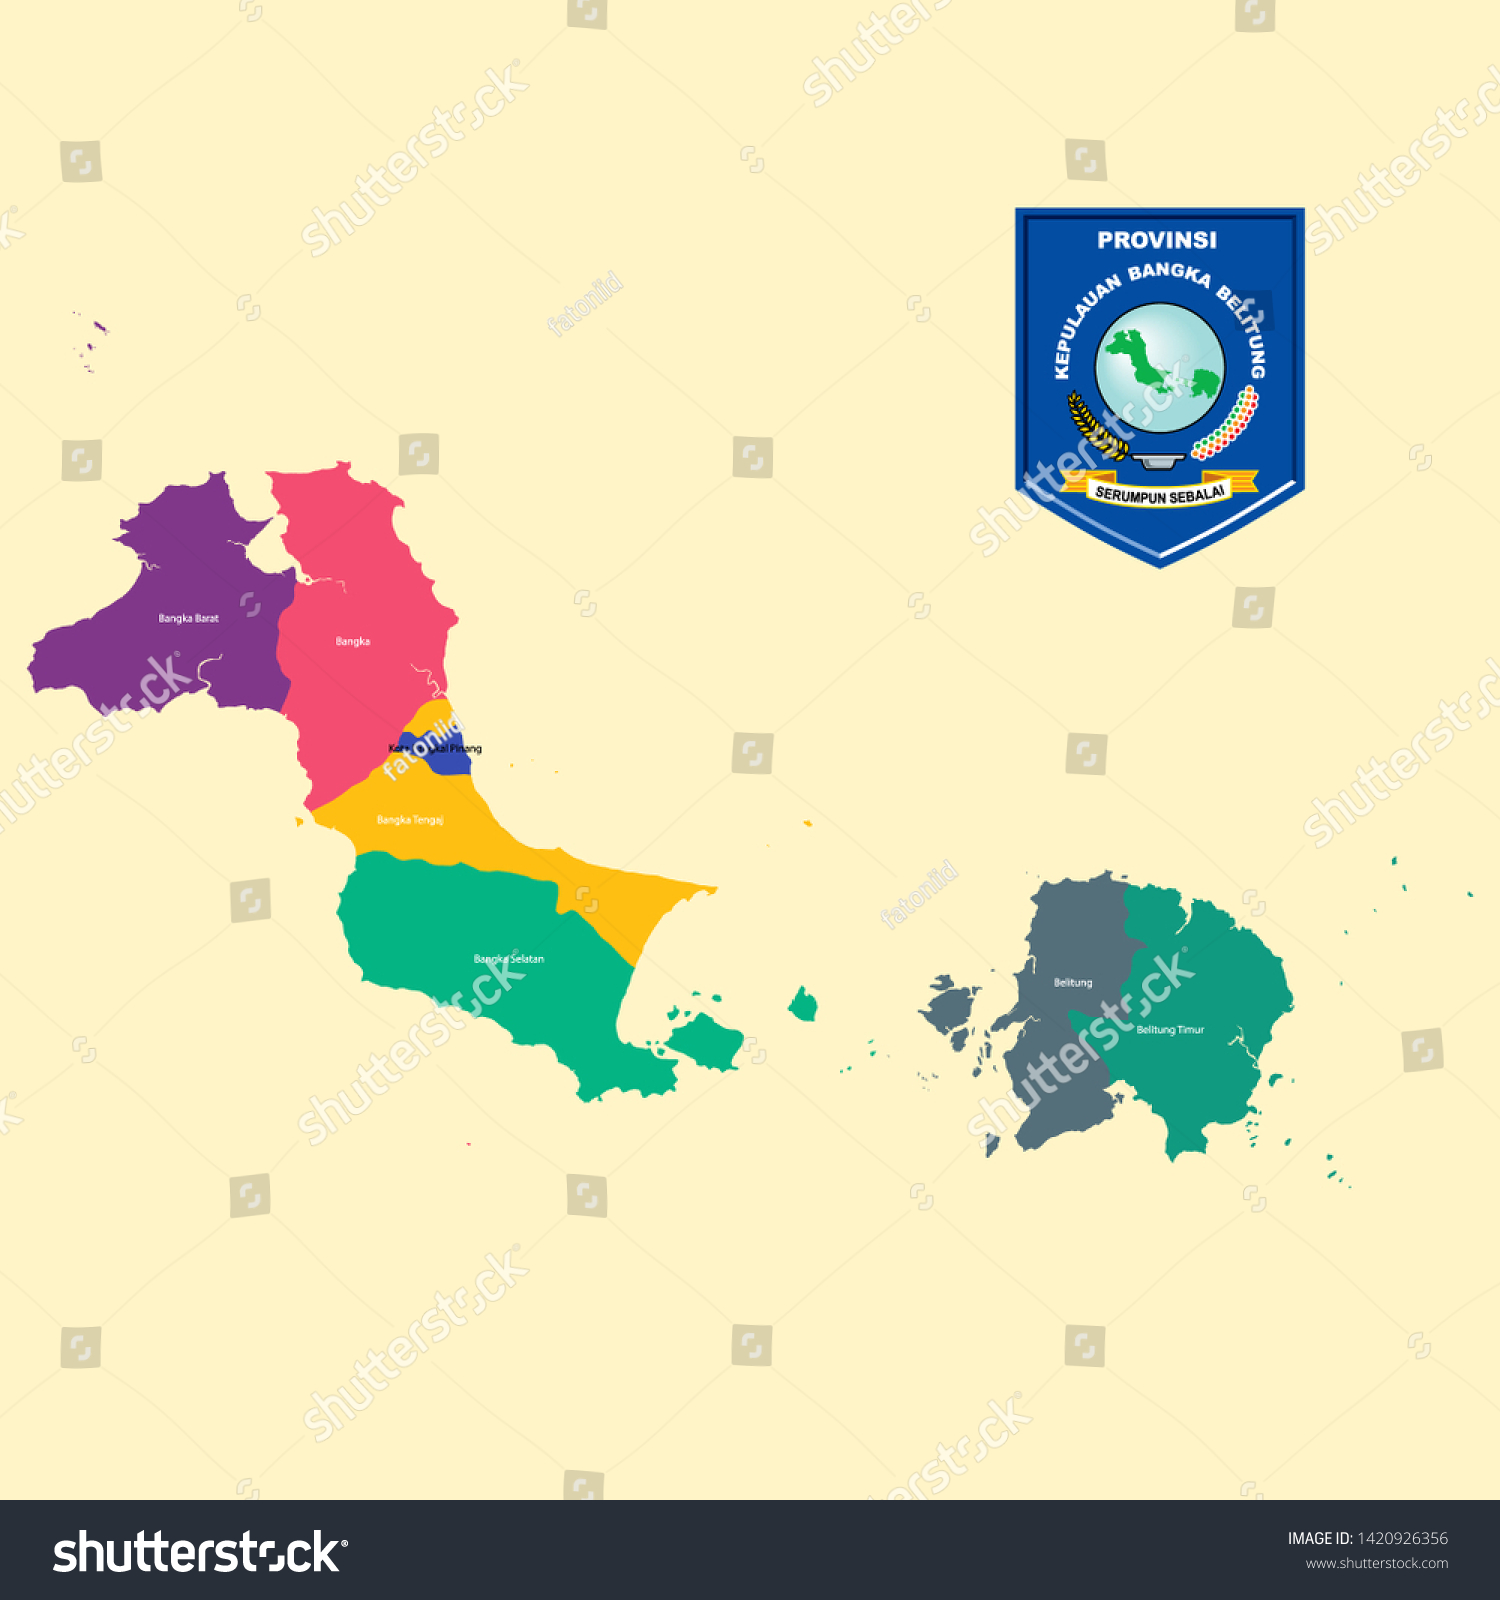 Stock Vector Colored Map And Logo Of Bangka Belitung 1420926356 